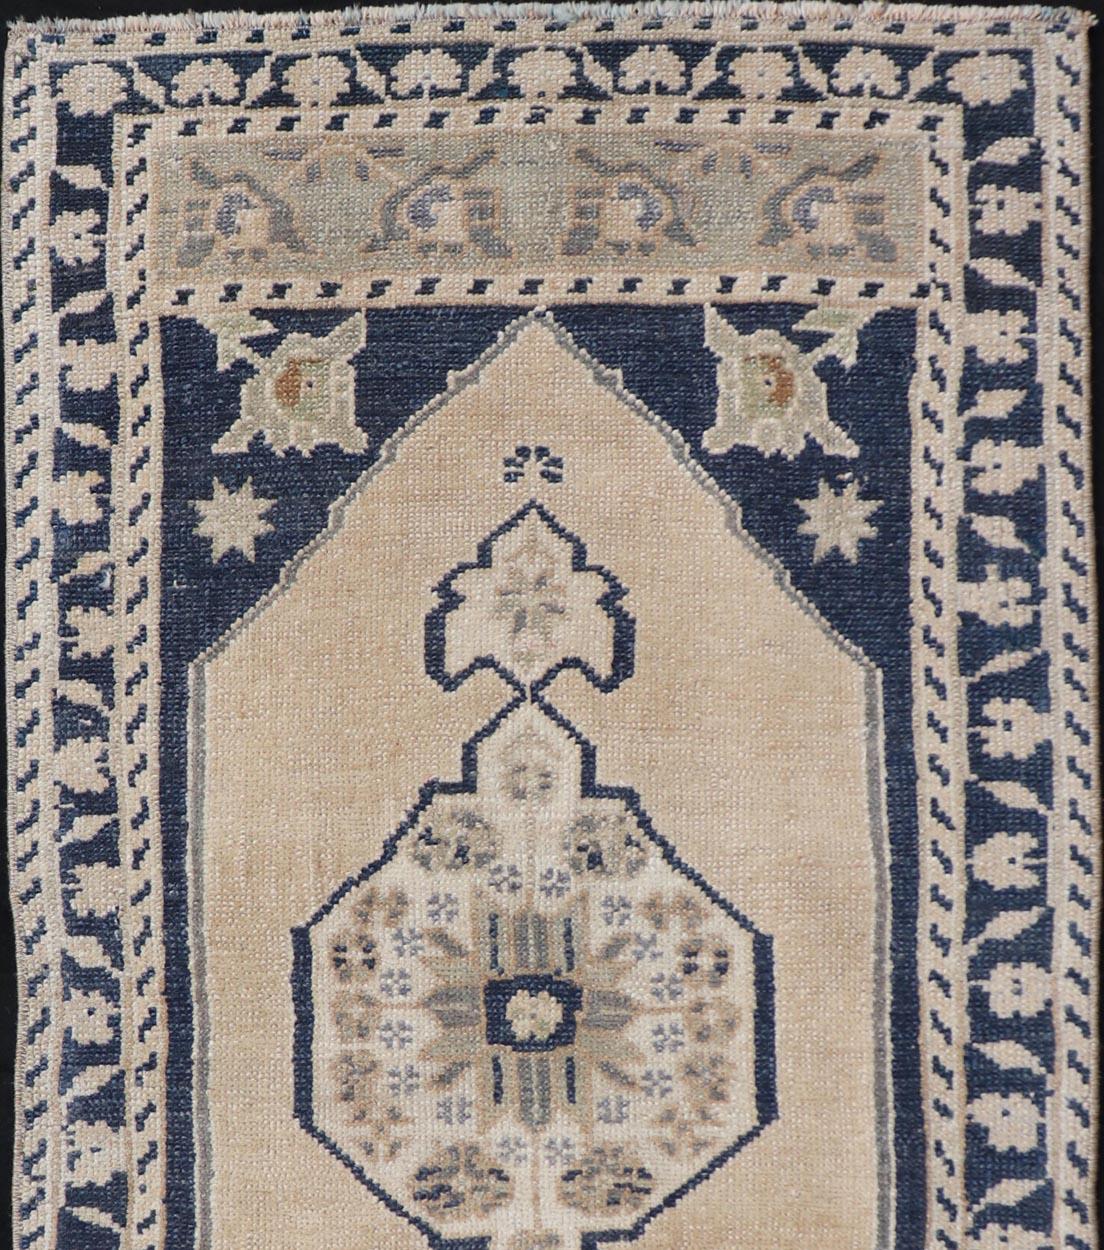 Vintage Turkish small mat size Oushak Rug with All-Over Sub-Geometric Medallion Design. Keivan Woven Arts / rug EN-15934, country of origin / type: Turkey / Oushak, circa 1950

Measures: 1'10 x 3'7.